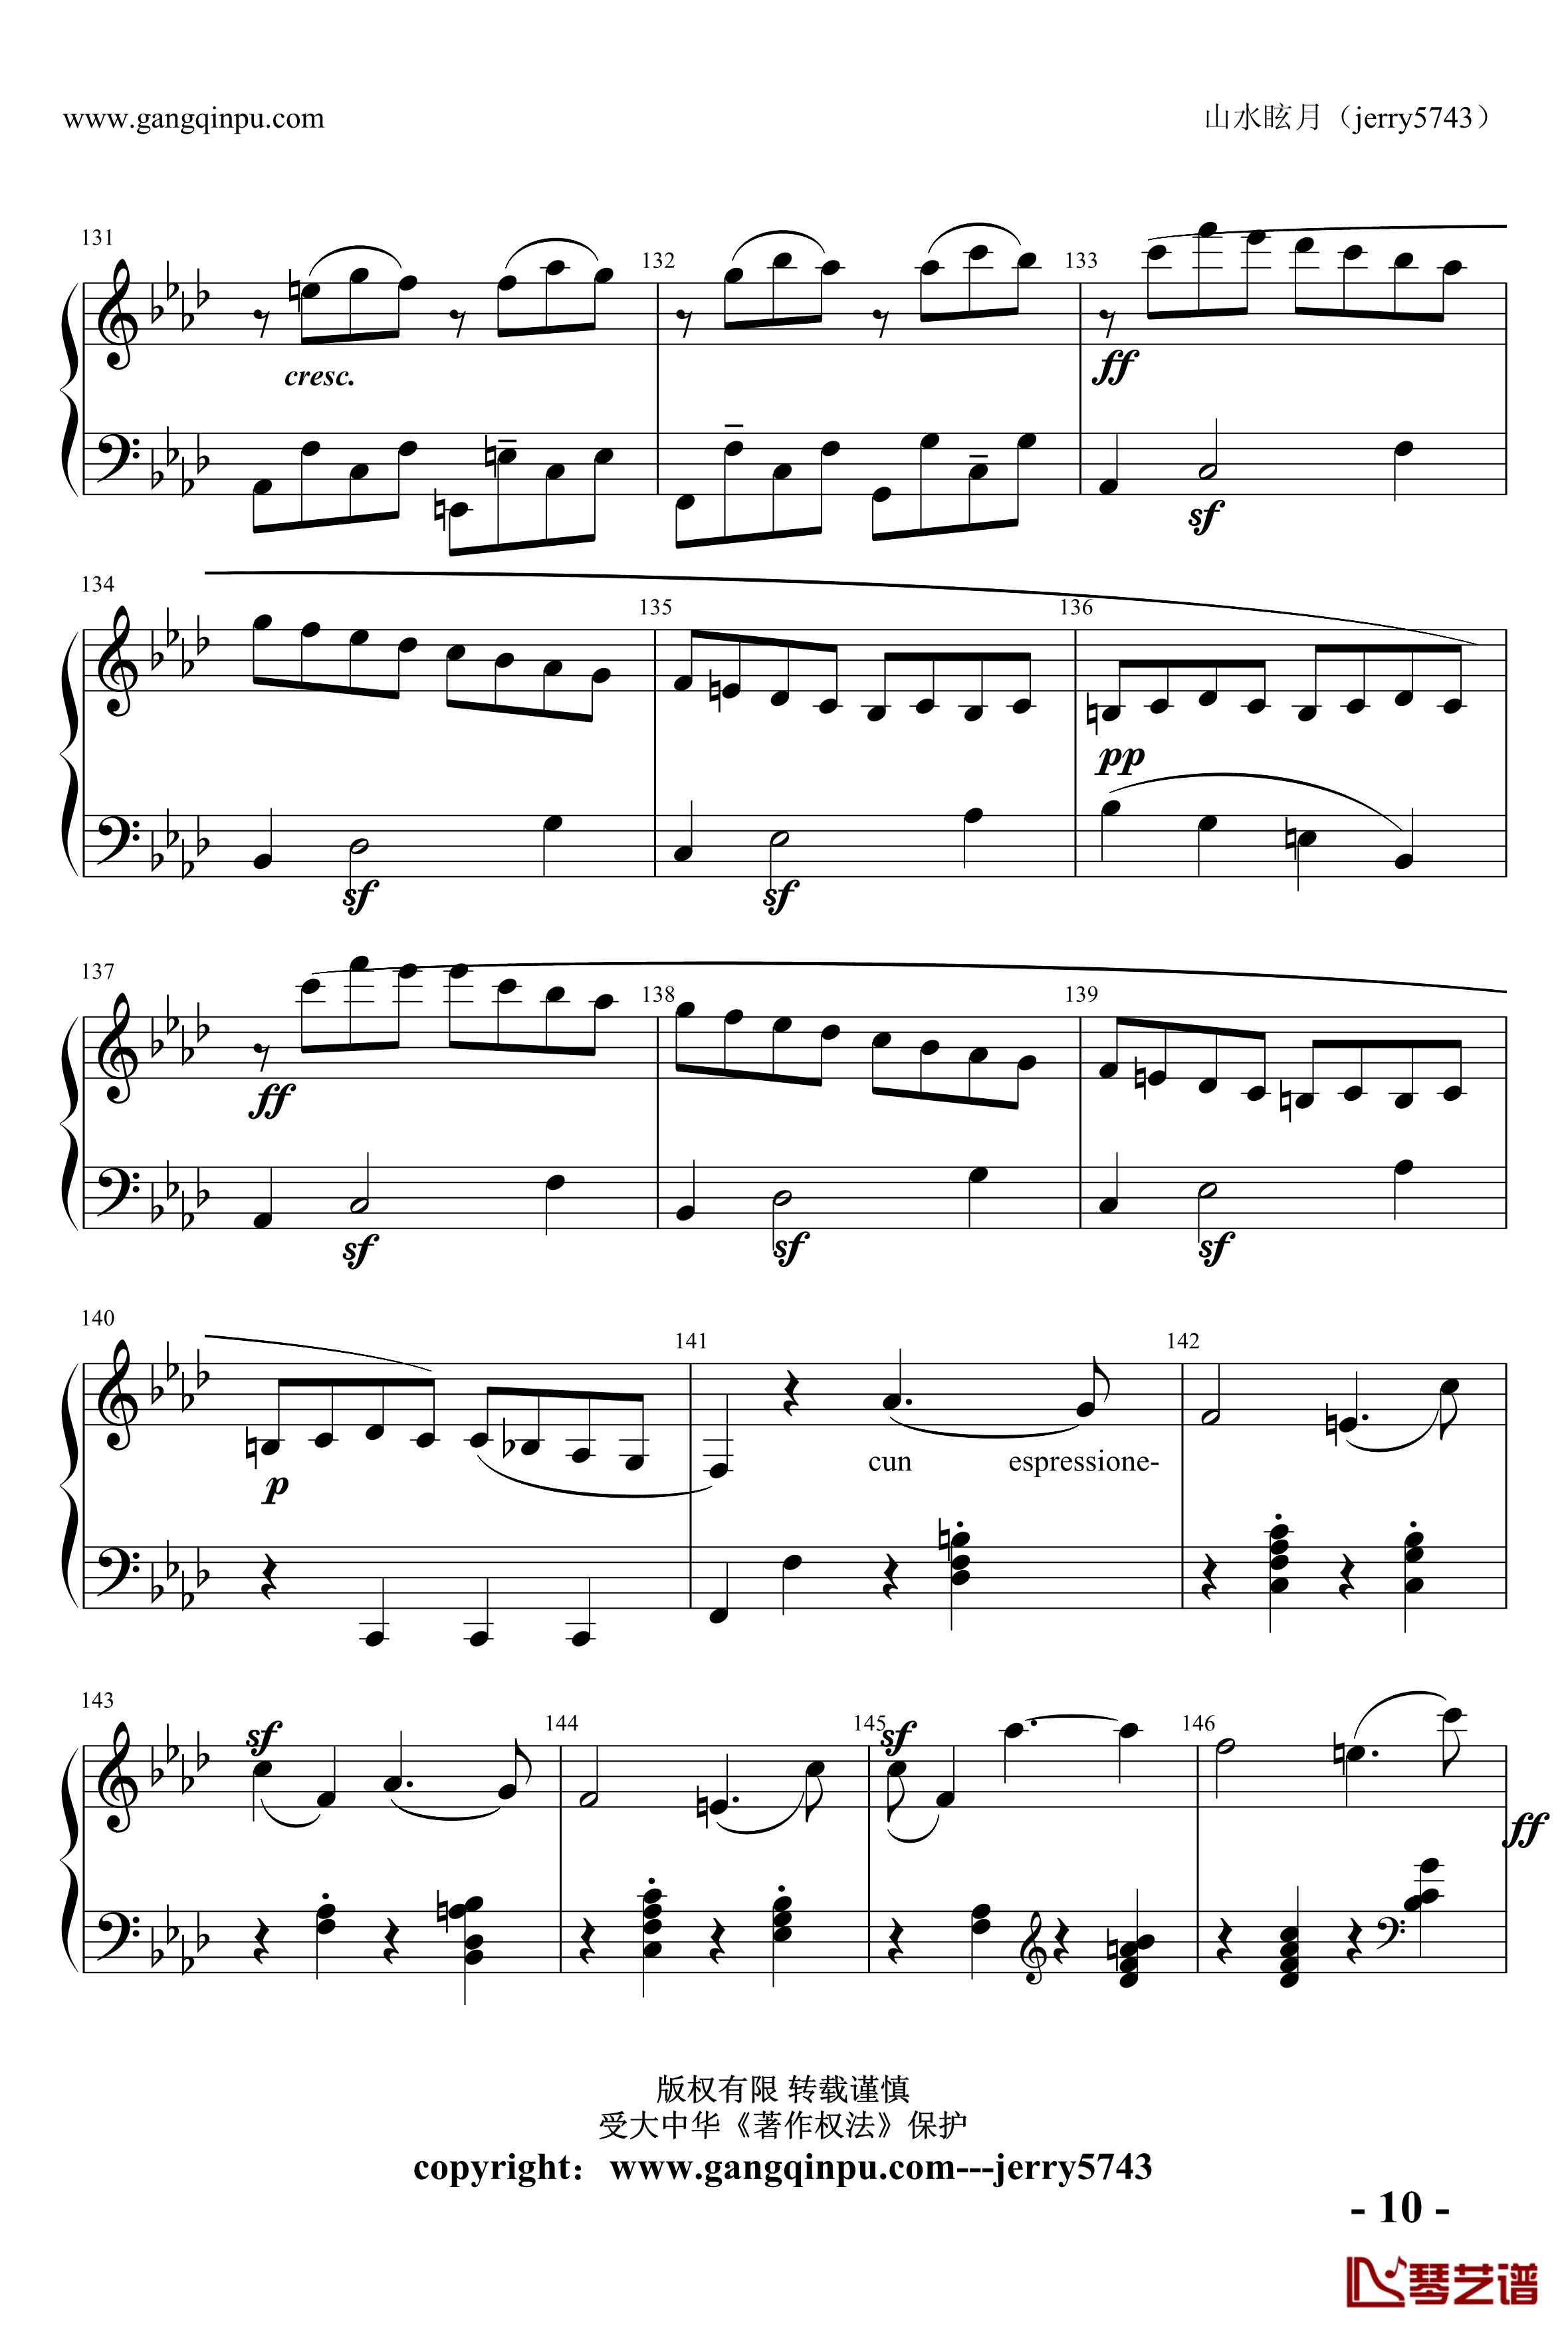 Piano Sonata No 1 part 1钢琴谱-贝多芬-beethoven10